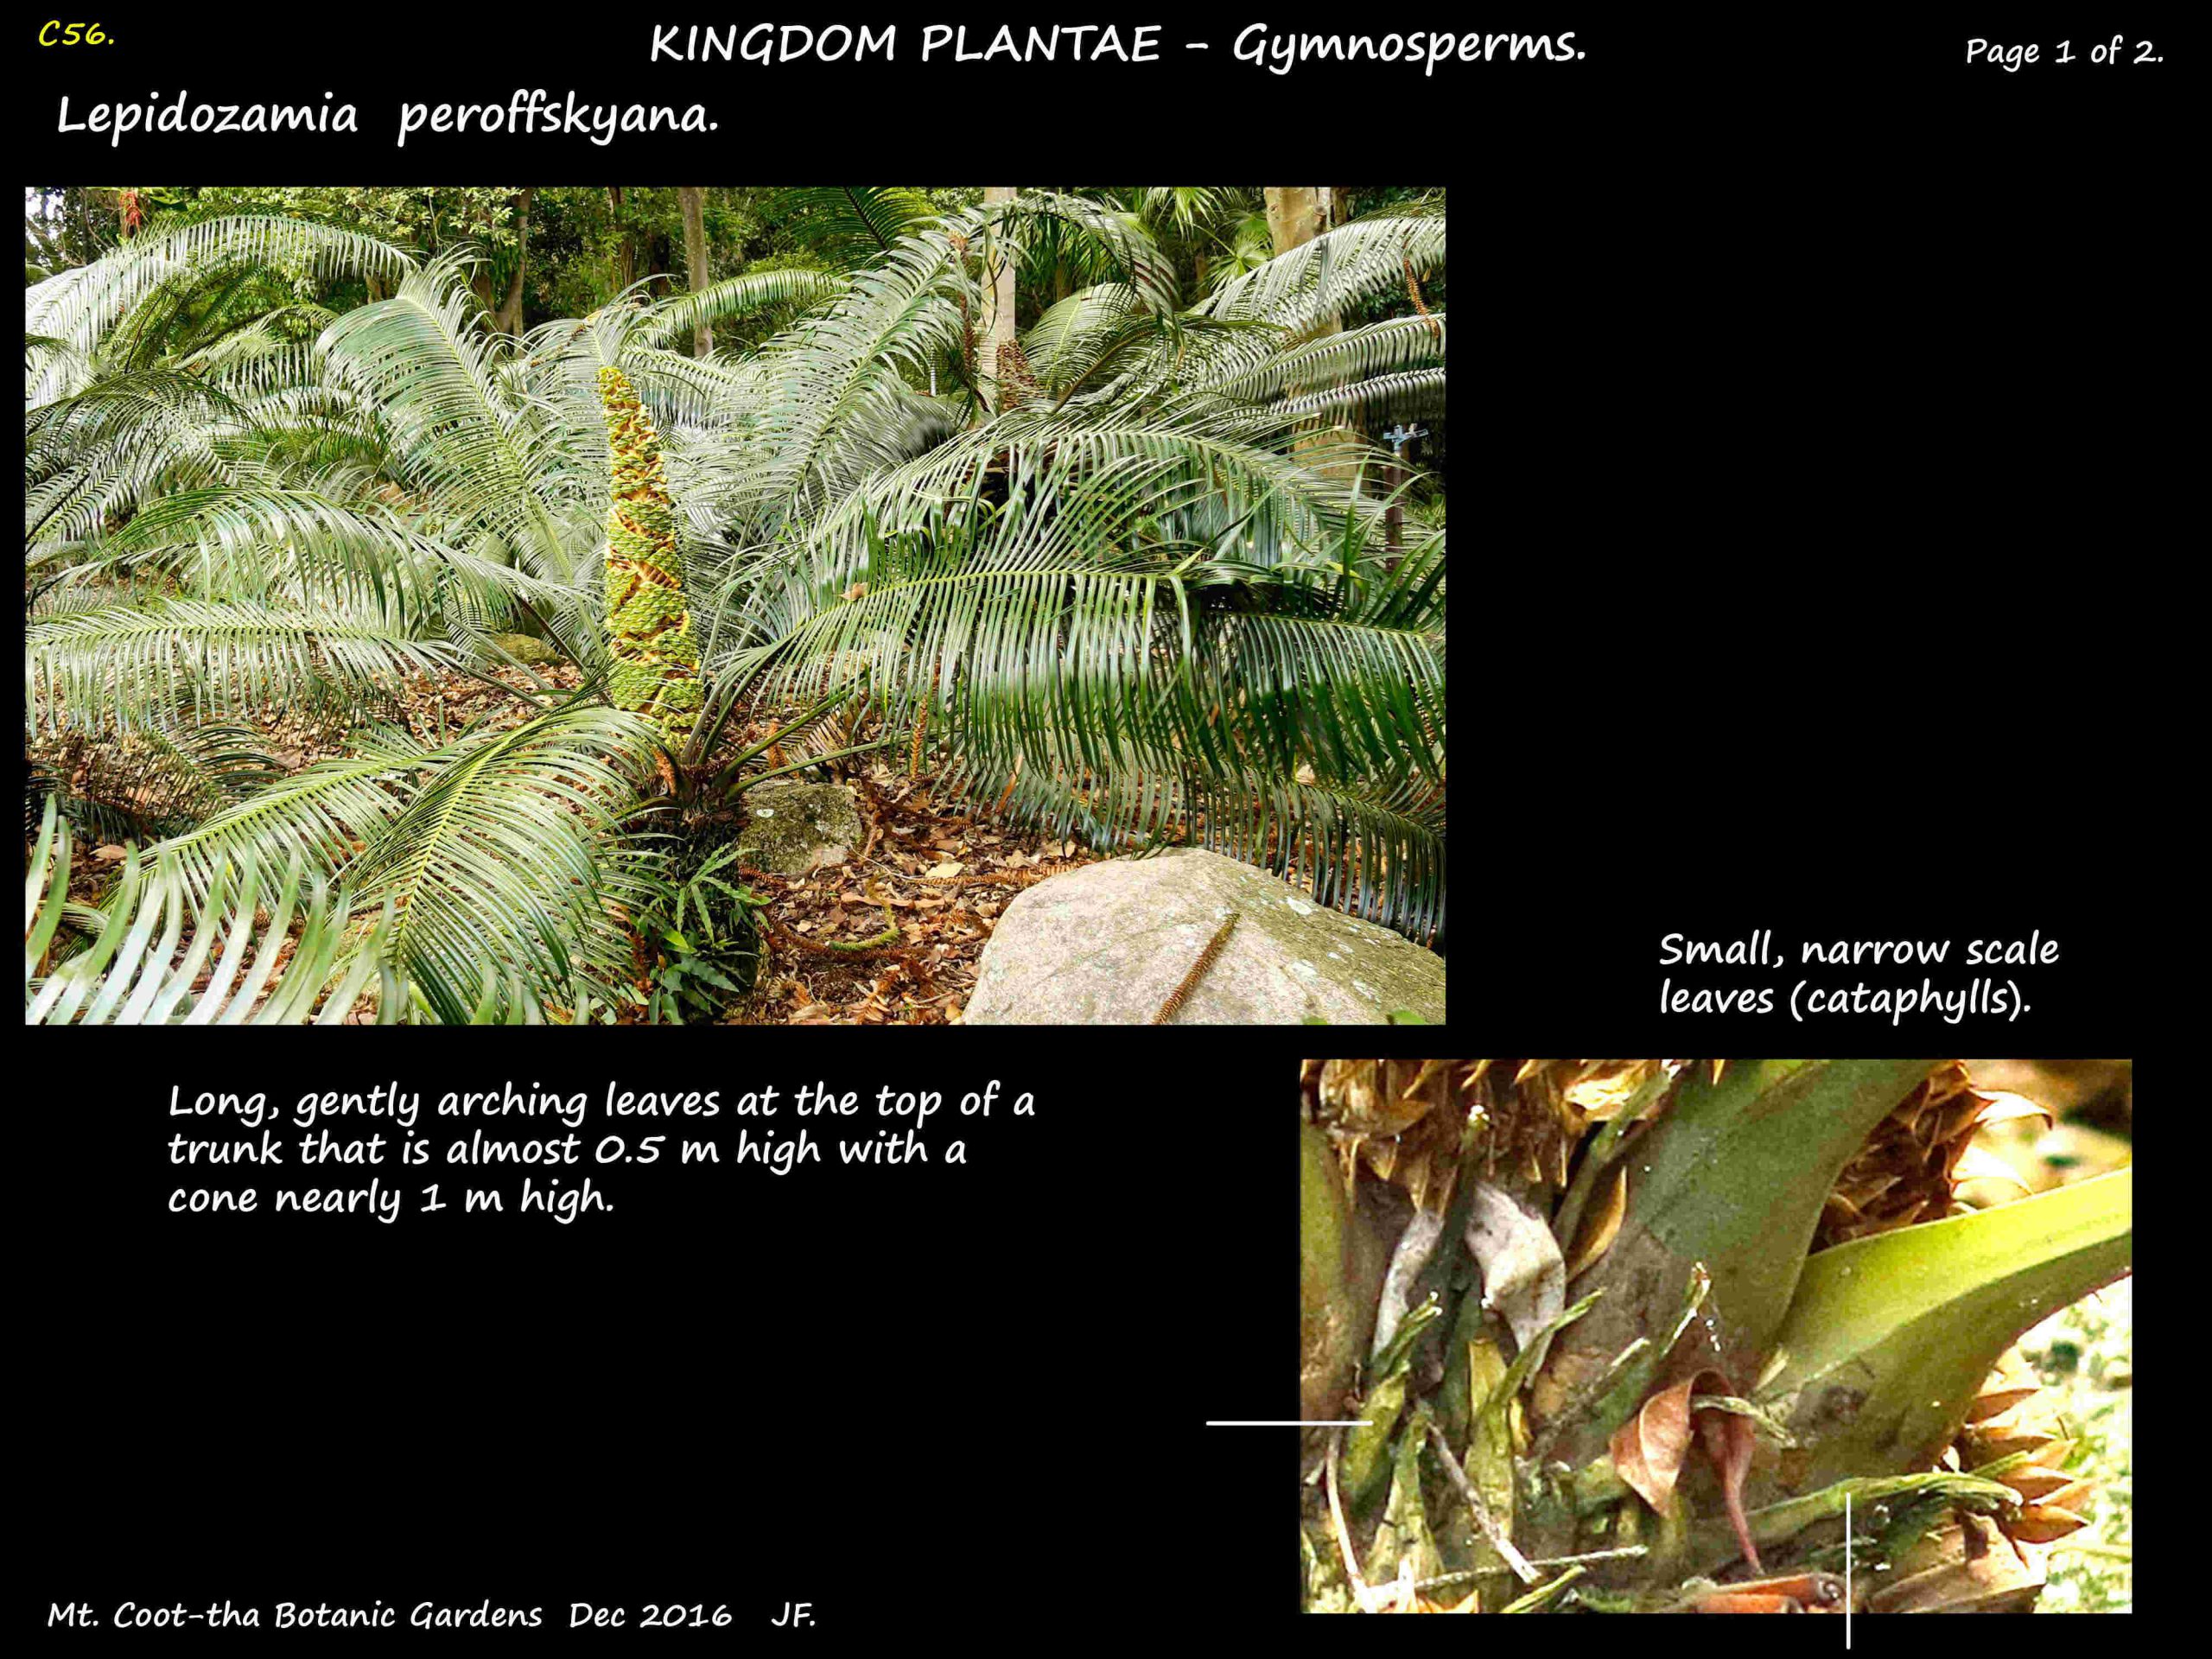 1 Lepidozamia peroffskyana plant & cone